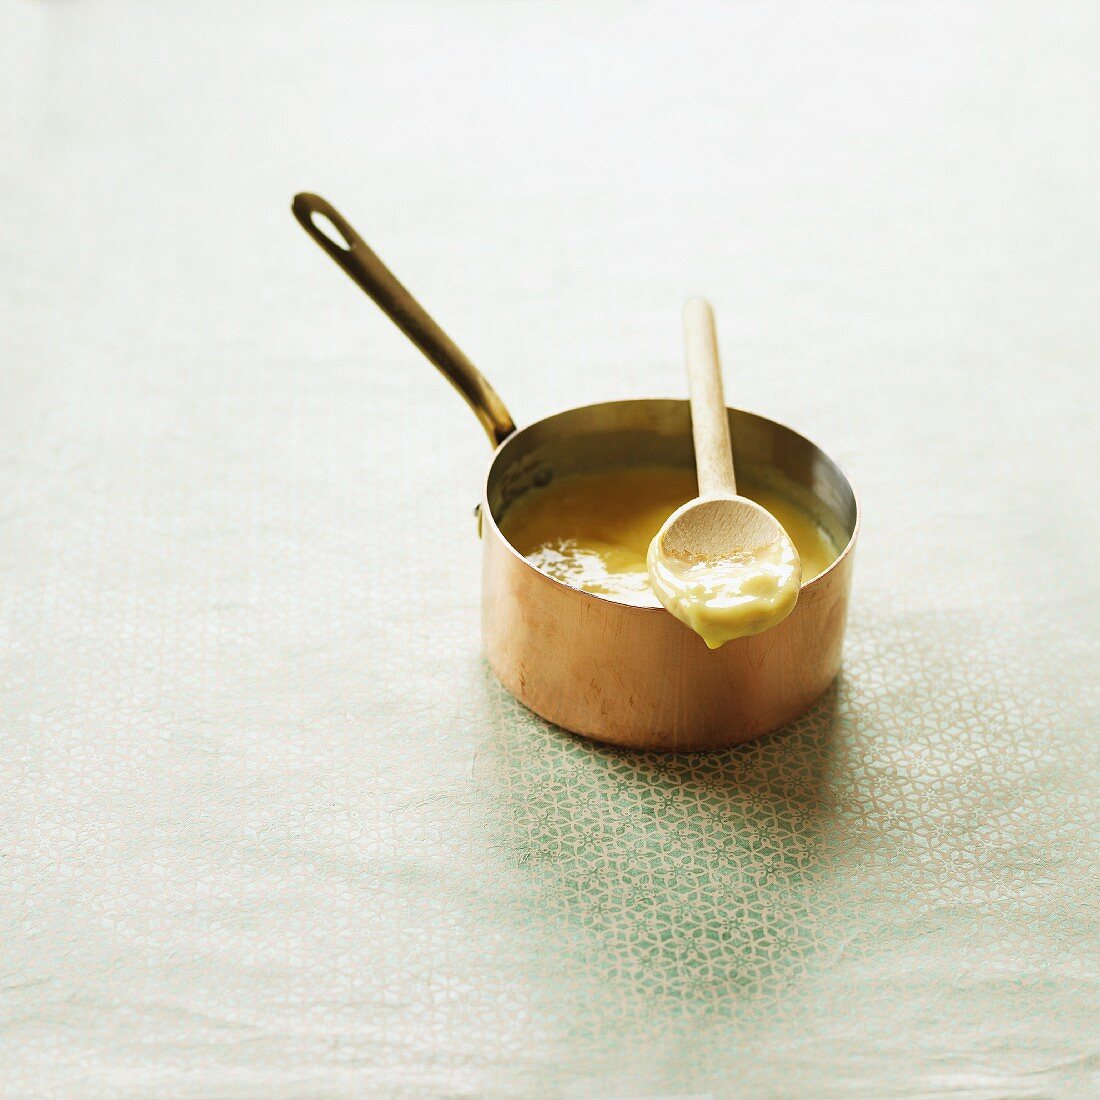 Vanilla cream in a saucepan